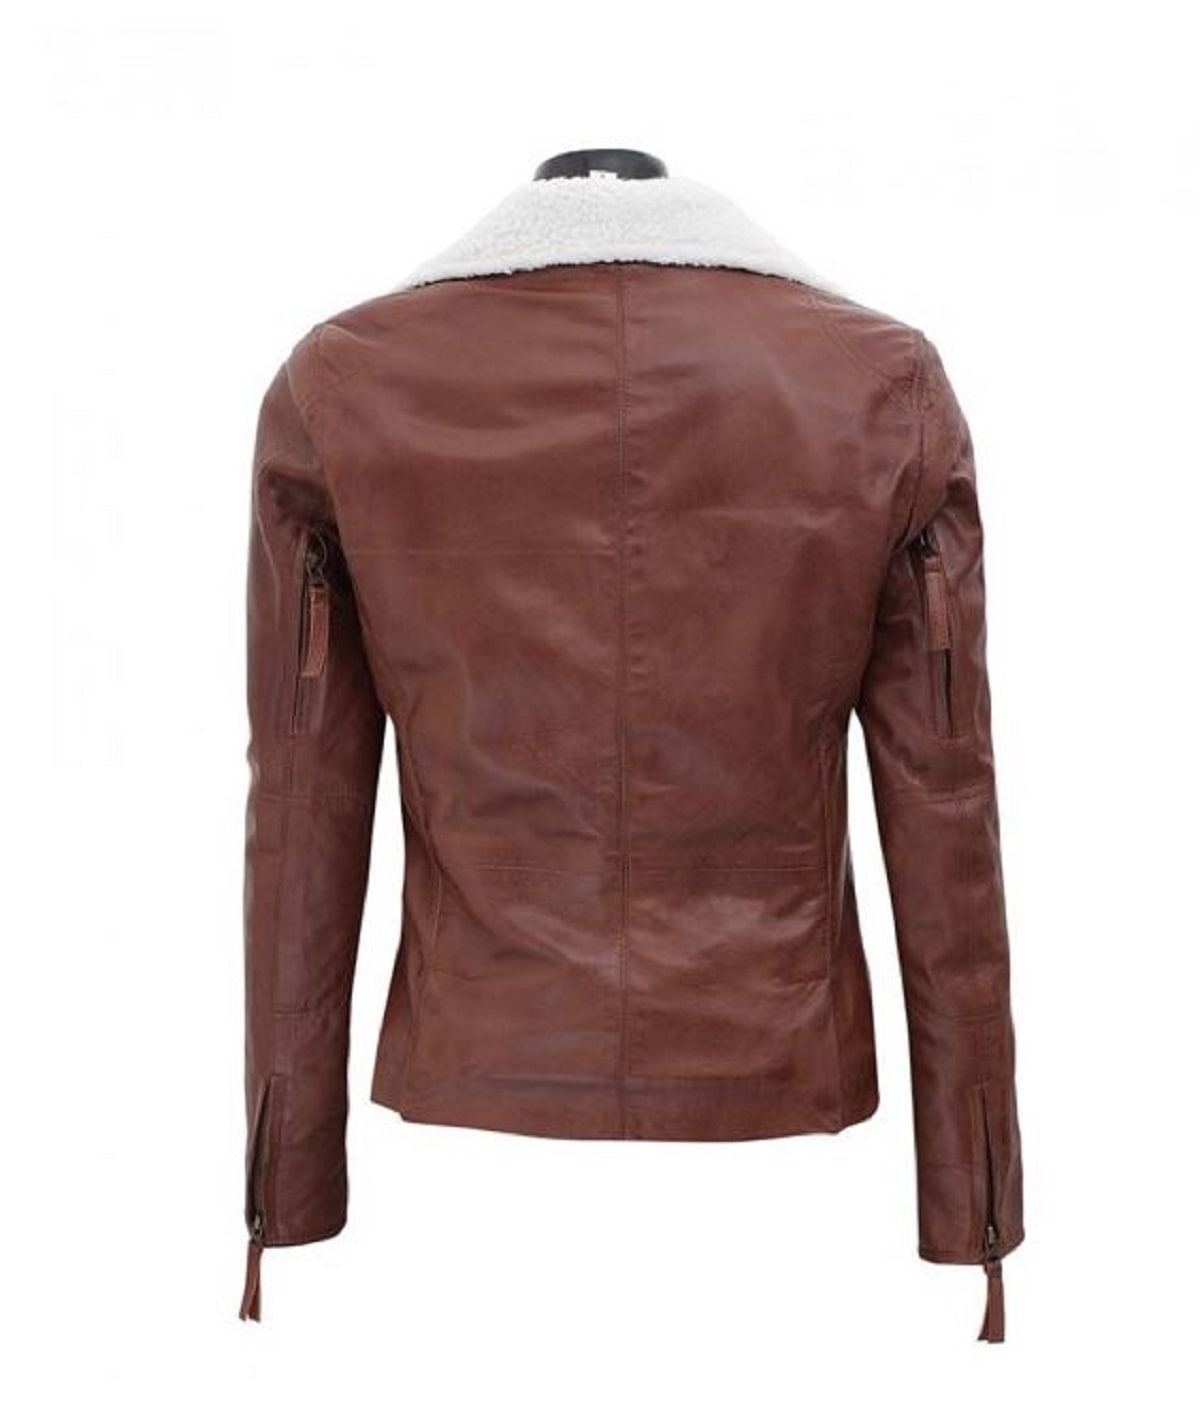 Women’s Waxed Leather Jacket - Fur Collar Jacket